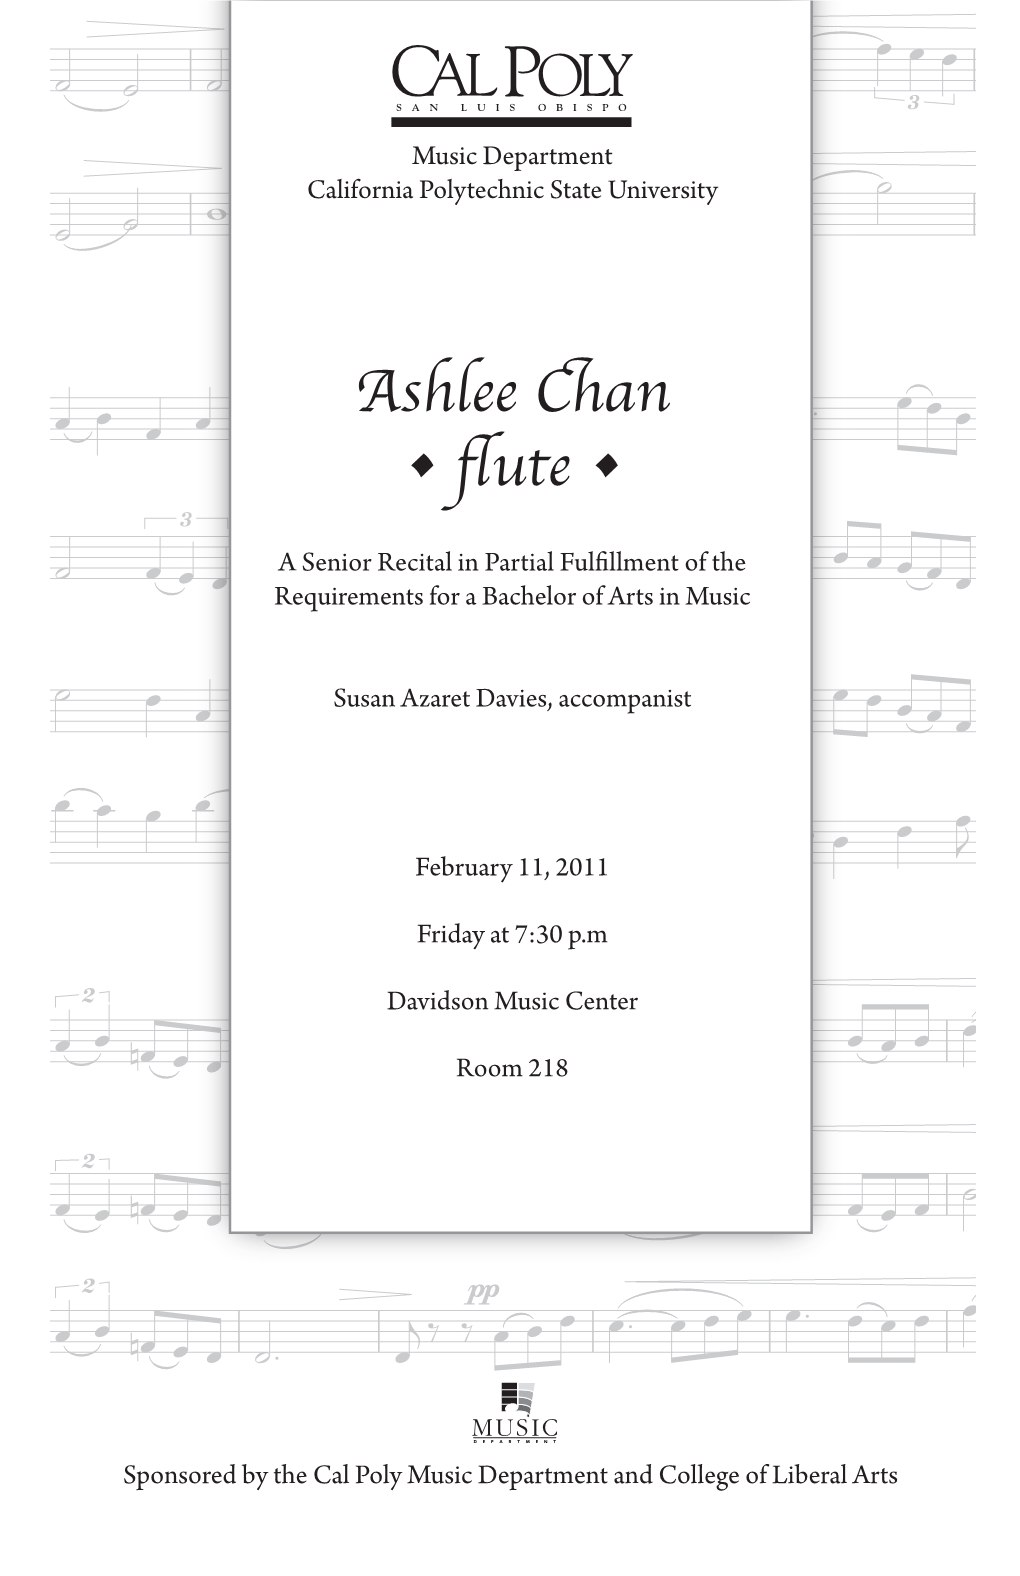 Ashlee an • Flute •